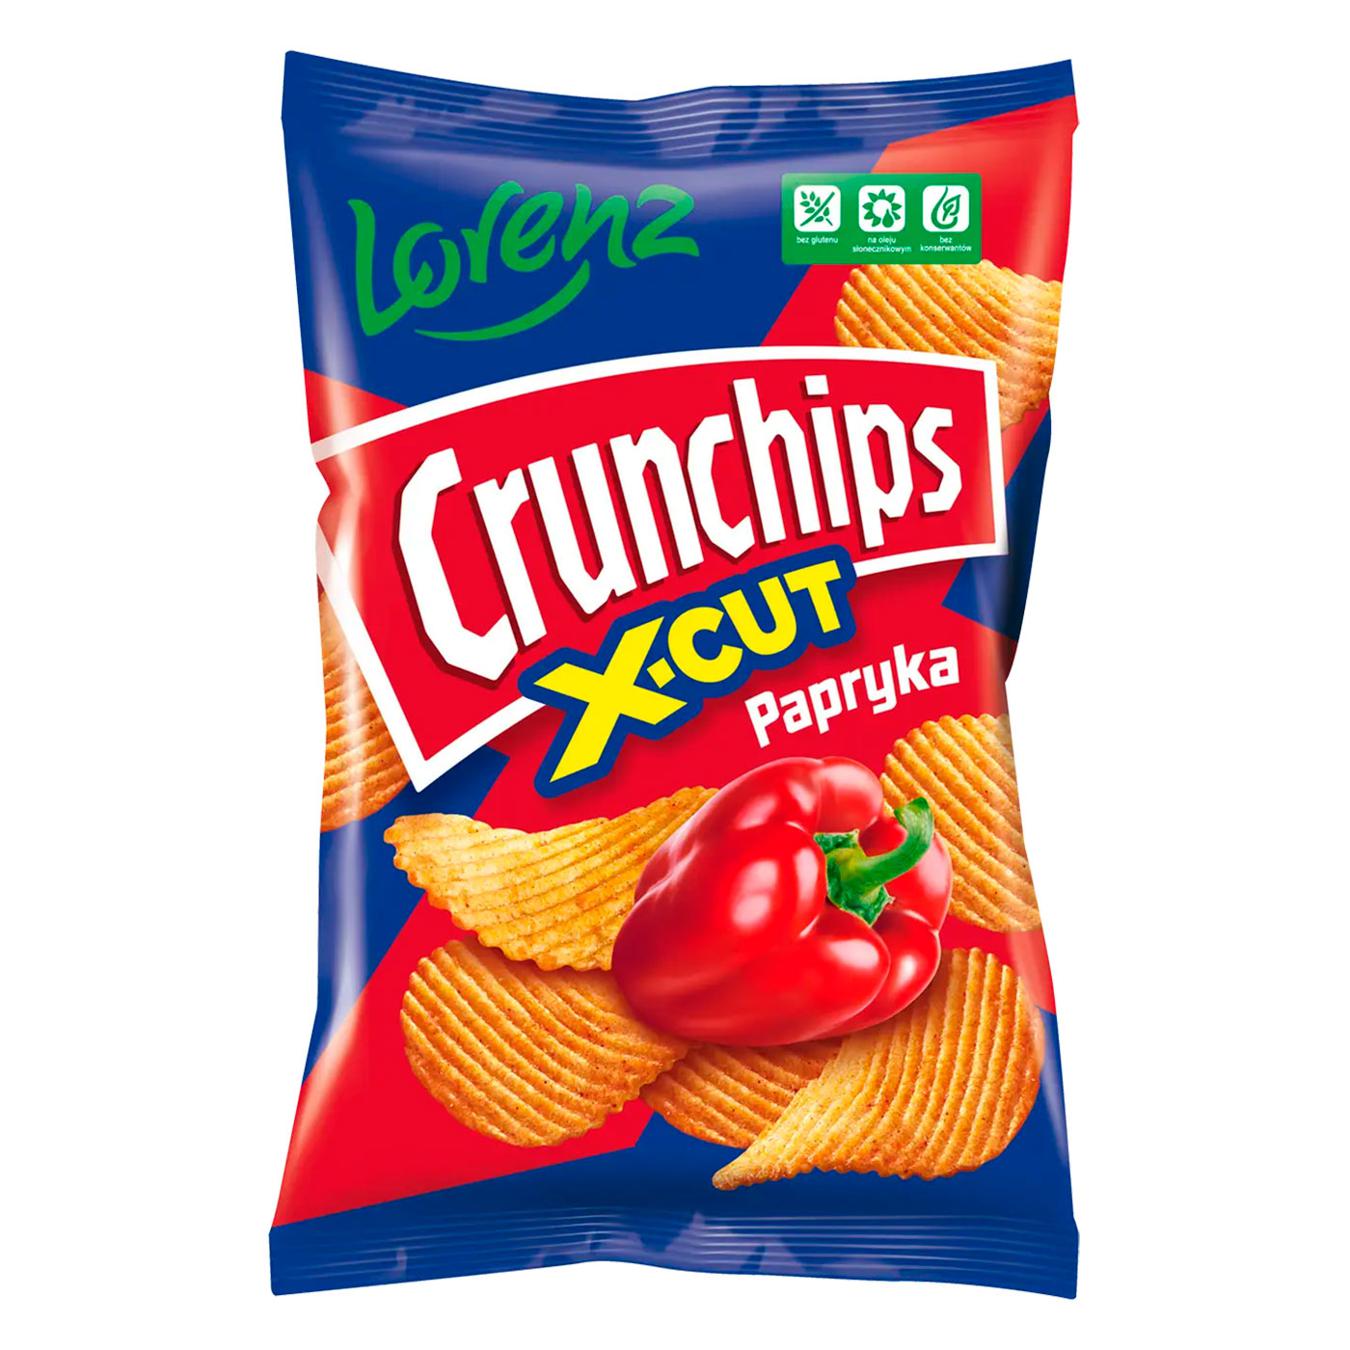 Lorenz x-cut potato chips with paprika flavor 140g